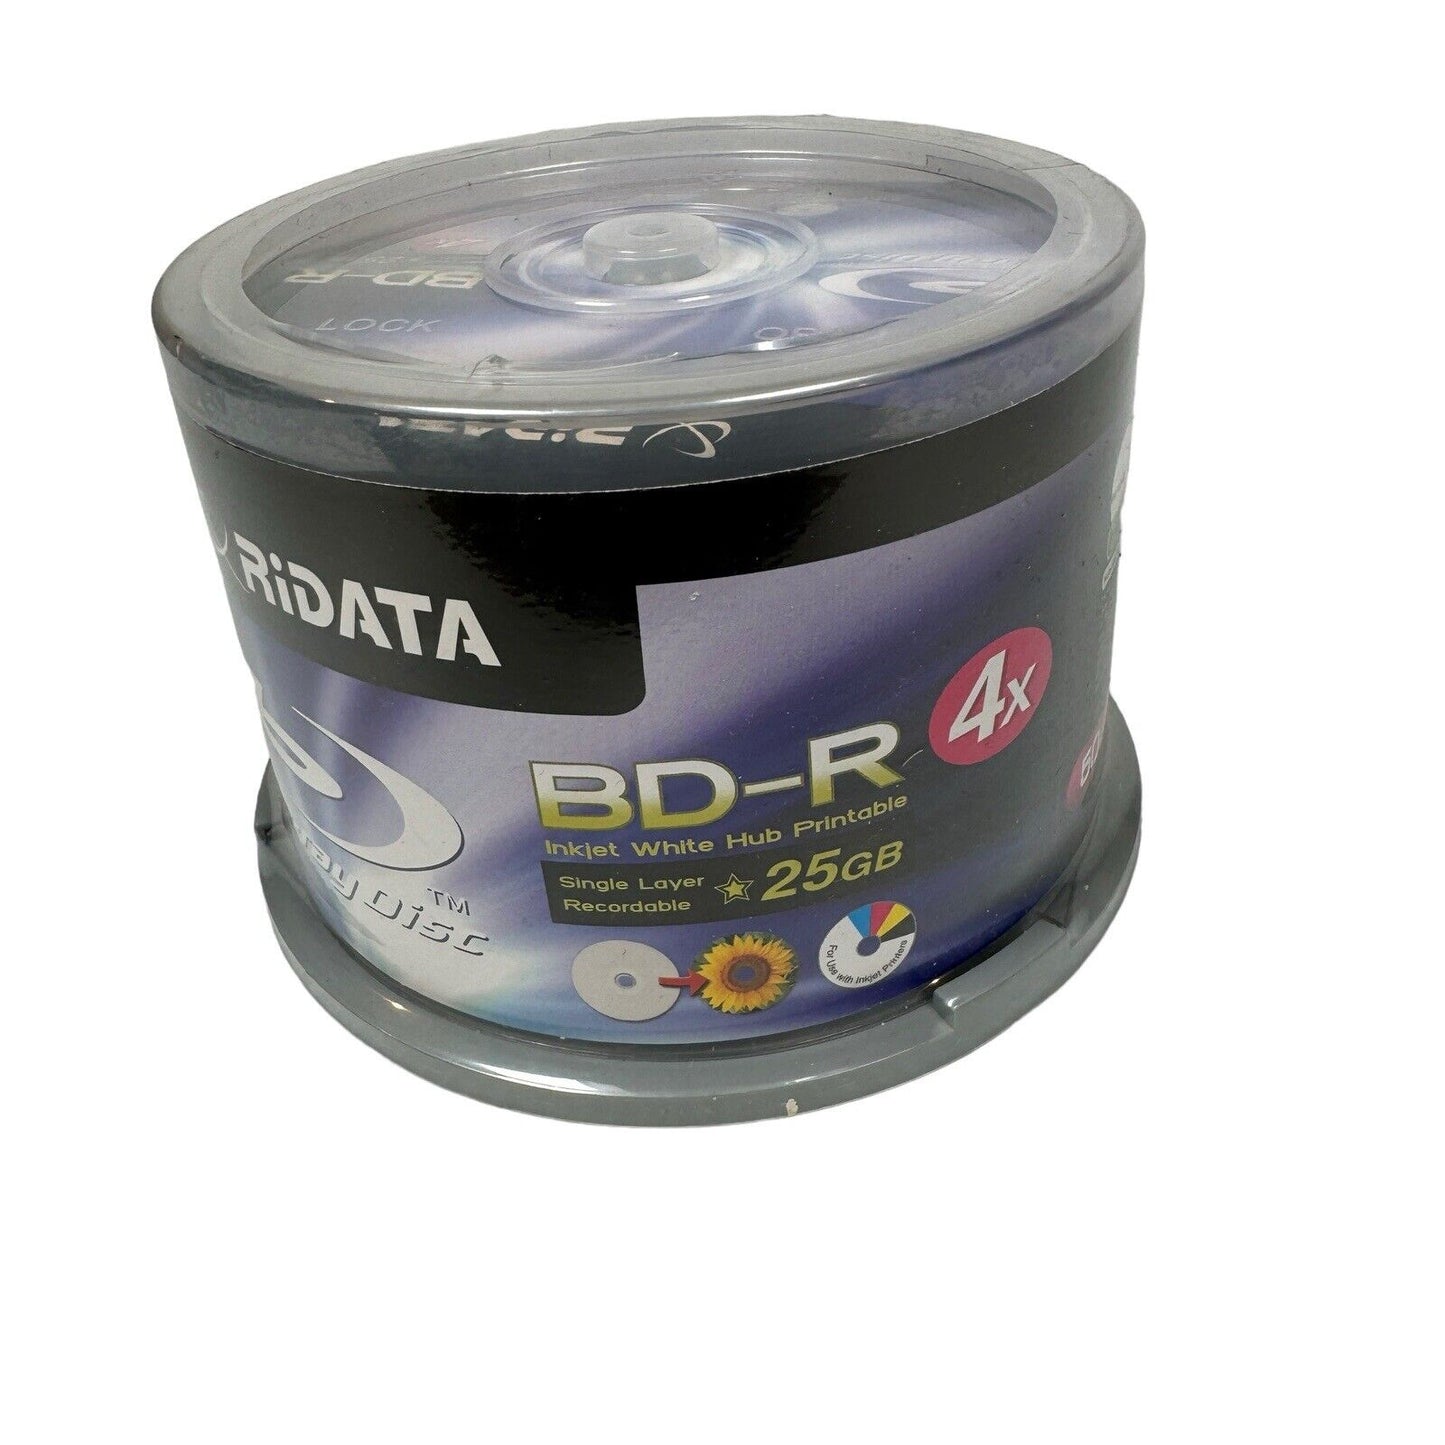 Ridata BD-R 4x 25GB Blu-ray Media White Inkjet Hub Printable Discs - Pack of 50